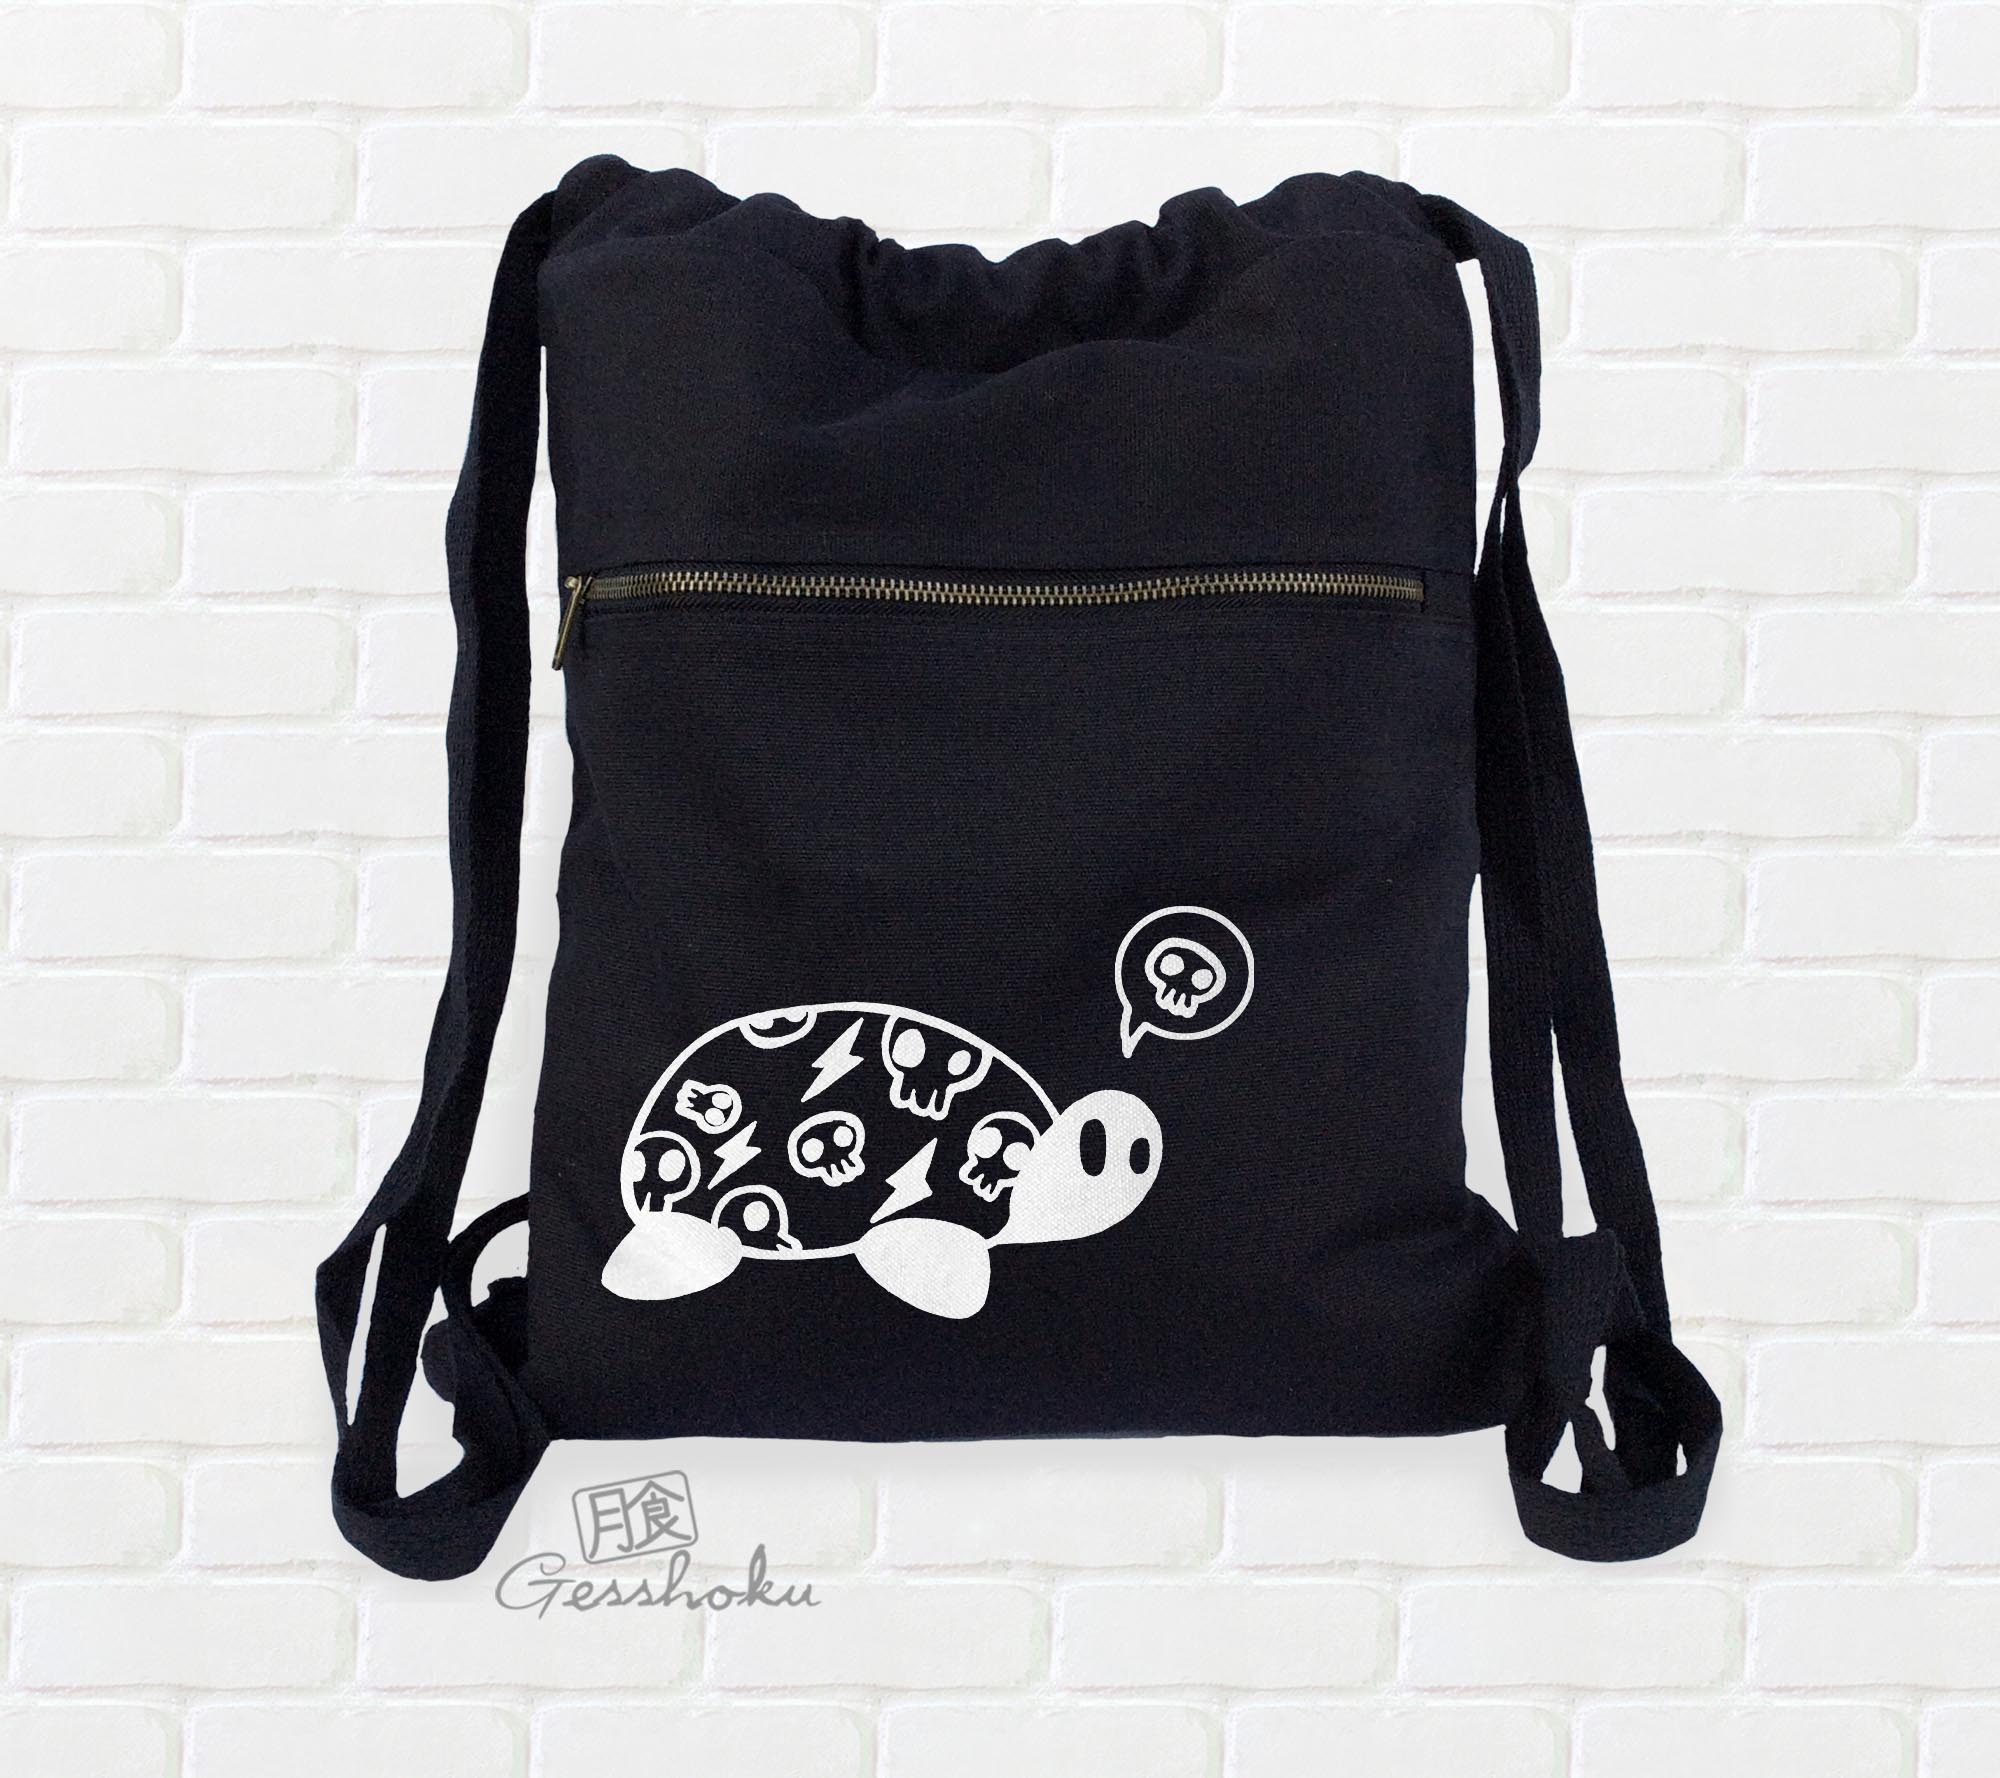 Harajuku Kame Turtle Cinch Backpack - Black